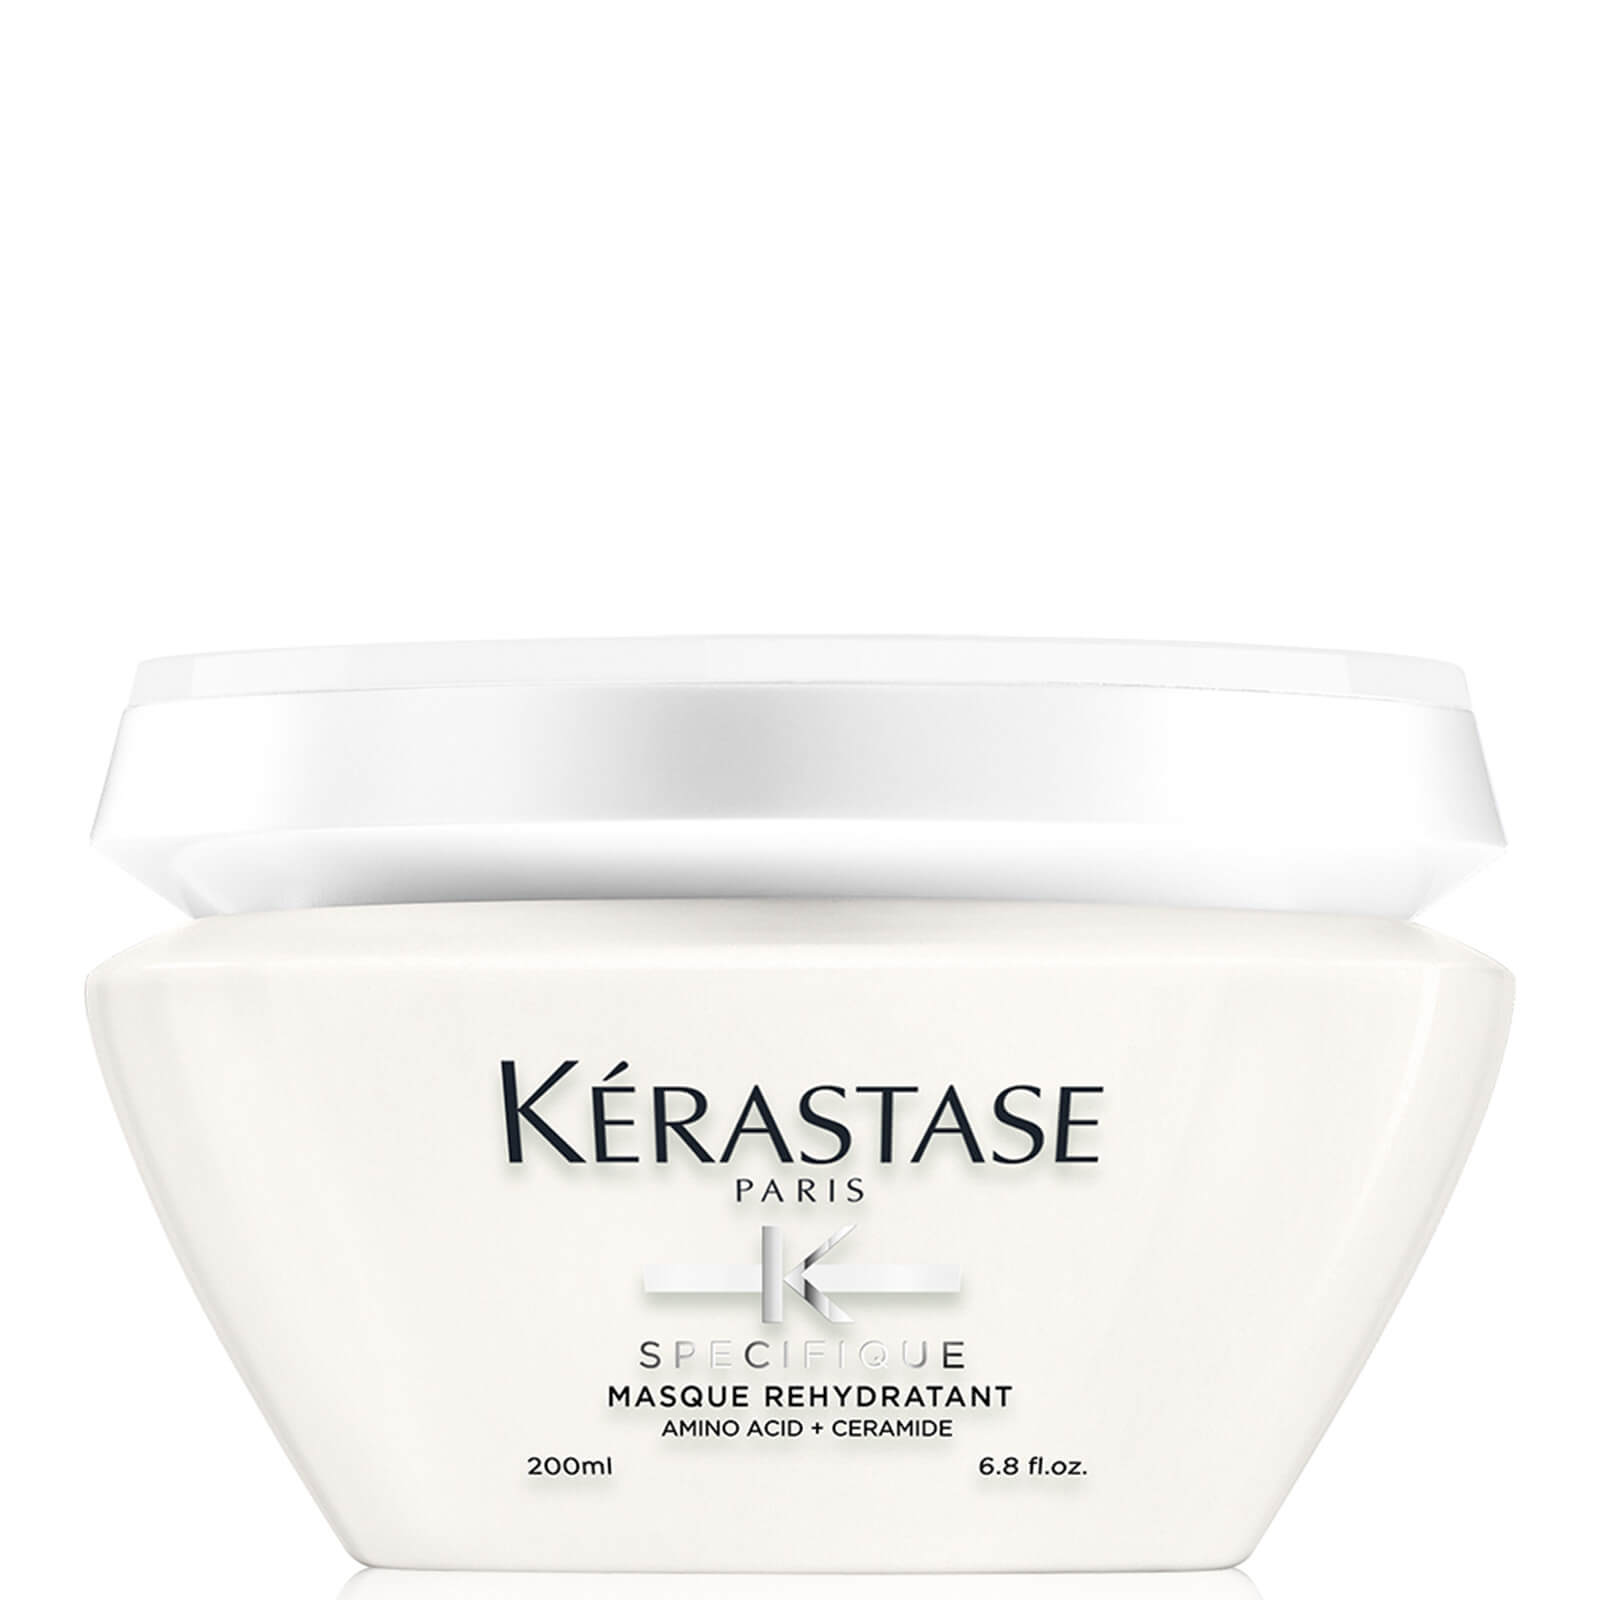 Kerastase Specifique Masque Rehydratant Hair Mask 200ml